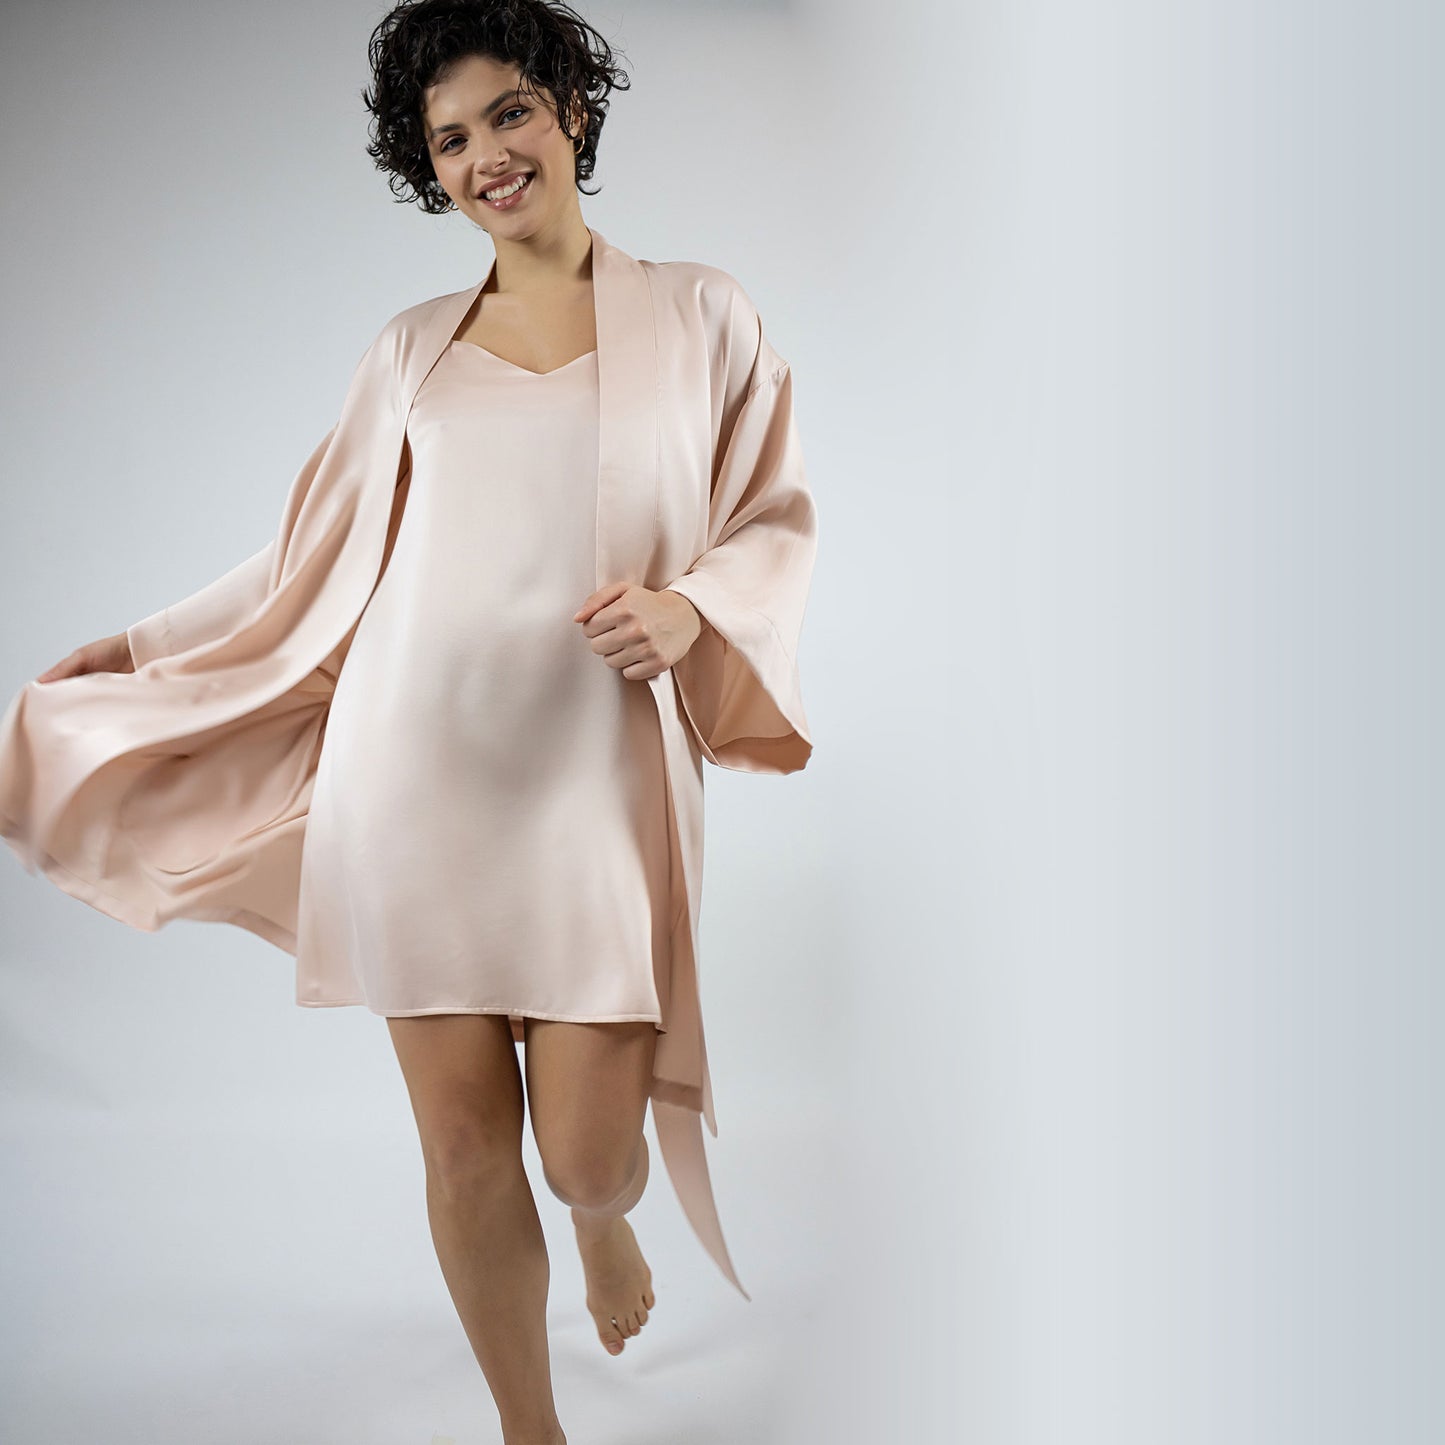 Silk Night Gown and slip dress by Nokaya in Pink